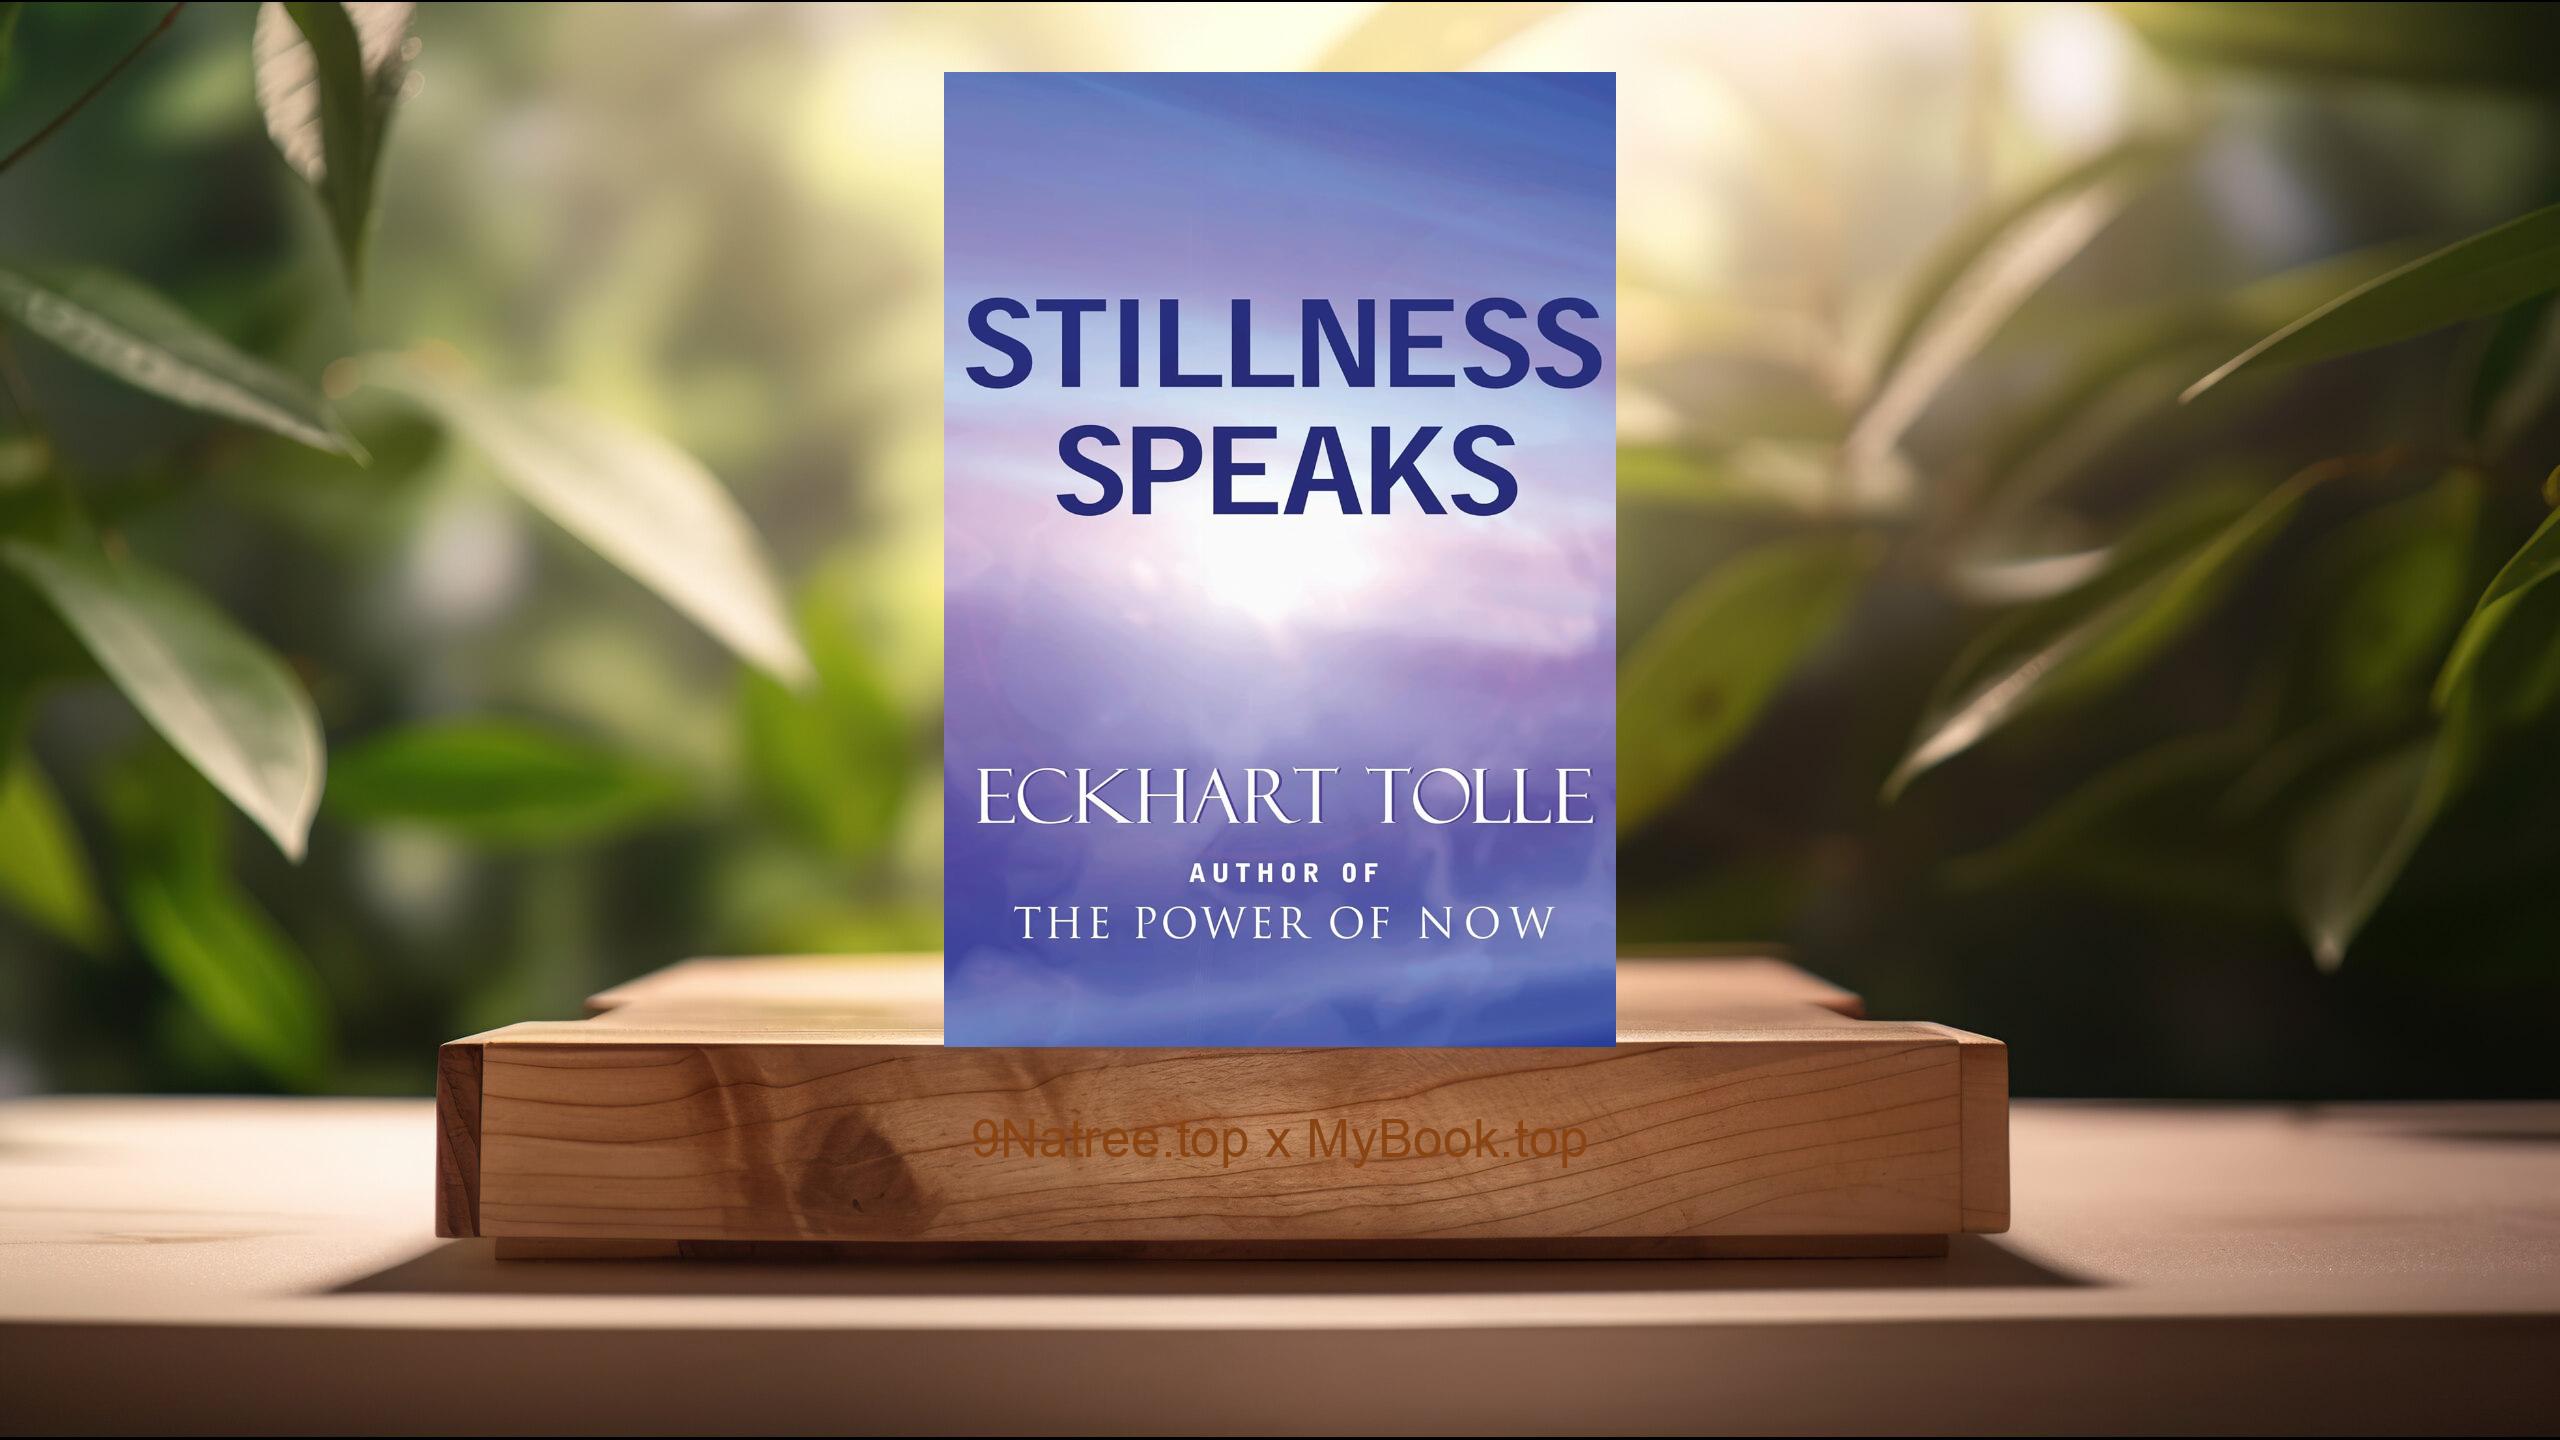 [Review] Stillness Speaks (Eckhart Tolle) Summarized